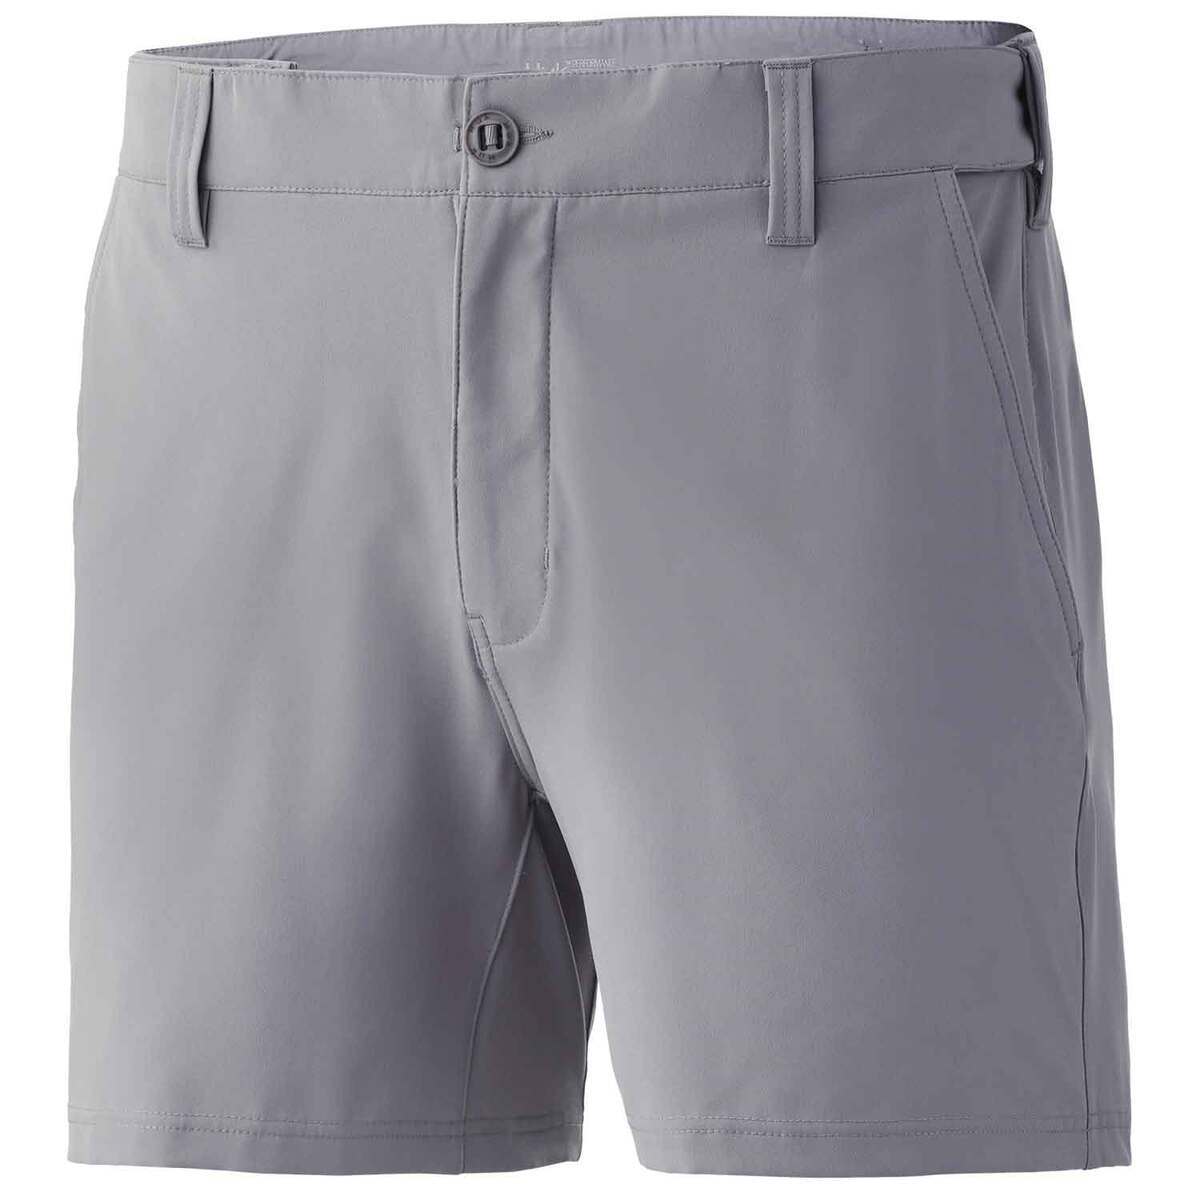 Huk Men's Pursuit Fishing Shorts - Overcast Grey - XL - Overcast Grey ...